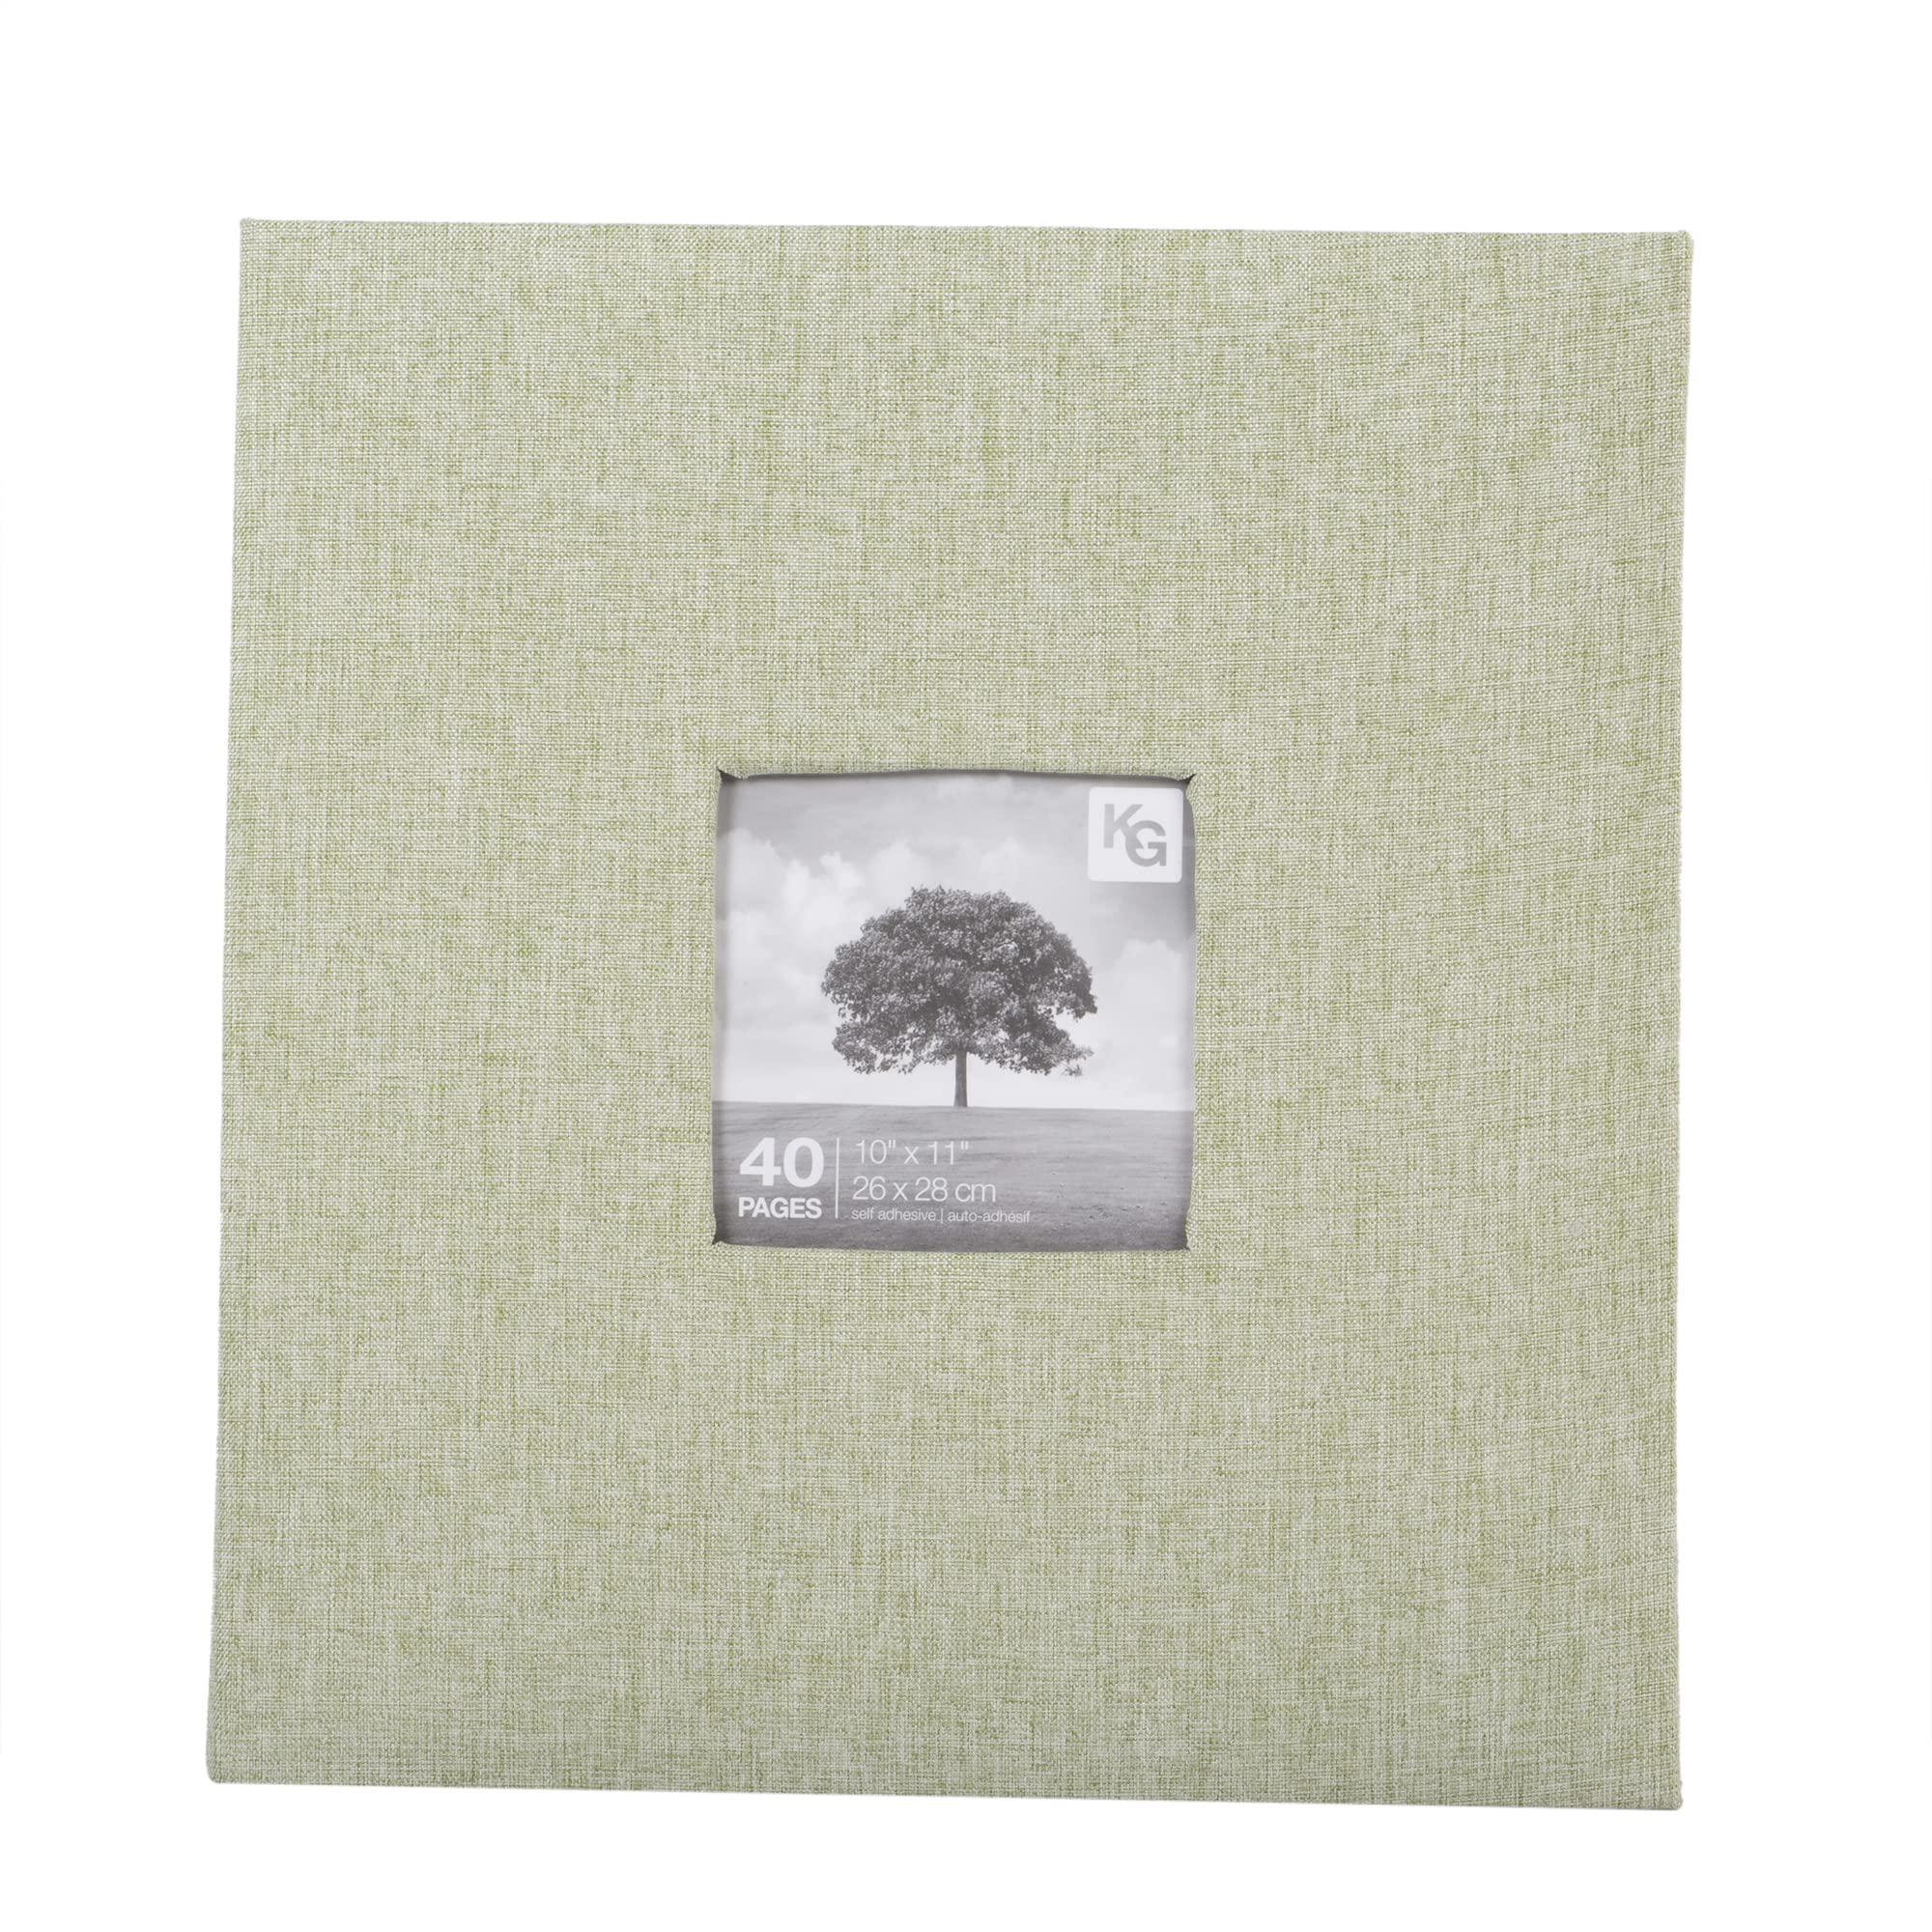 kiera grace self-adhesive linen photo album & scrapbook, 1.57"l x 11.42w x 10.63"h, green